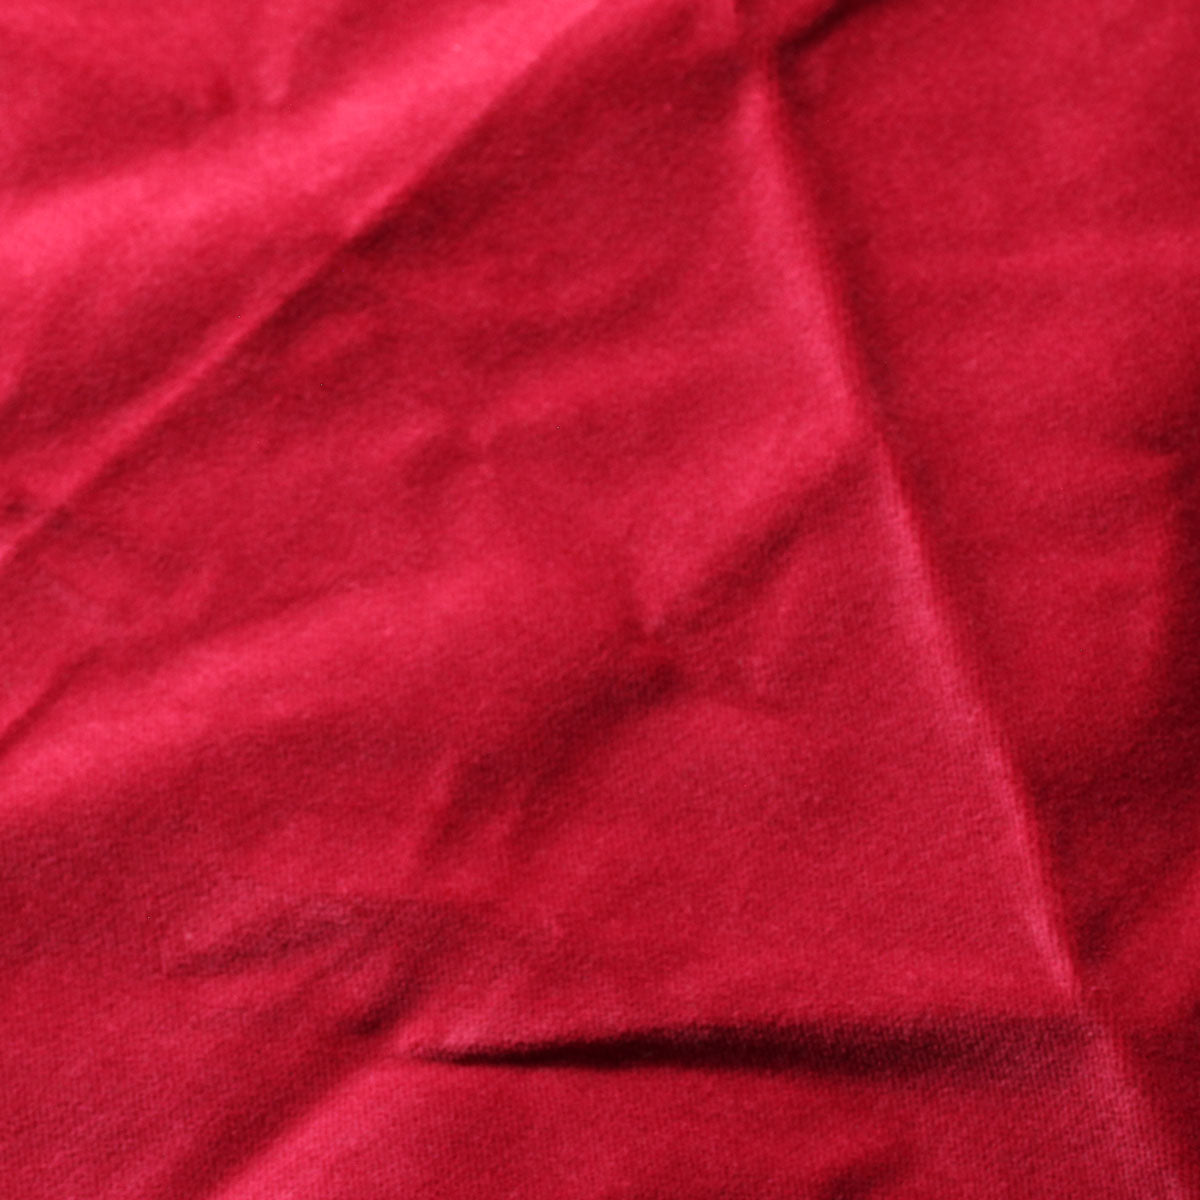 Scarlet Red Cotton Velvet Upholstery Drapery Fabric - Fashion Fabrics Los Angeles 